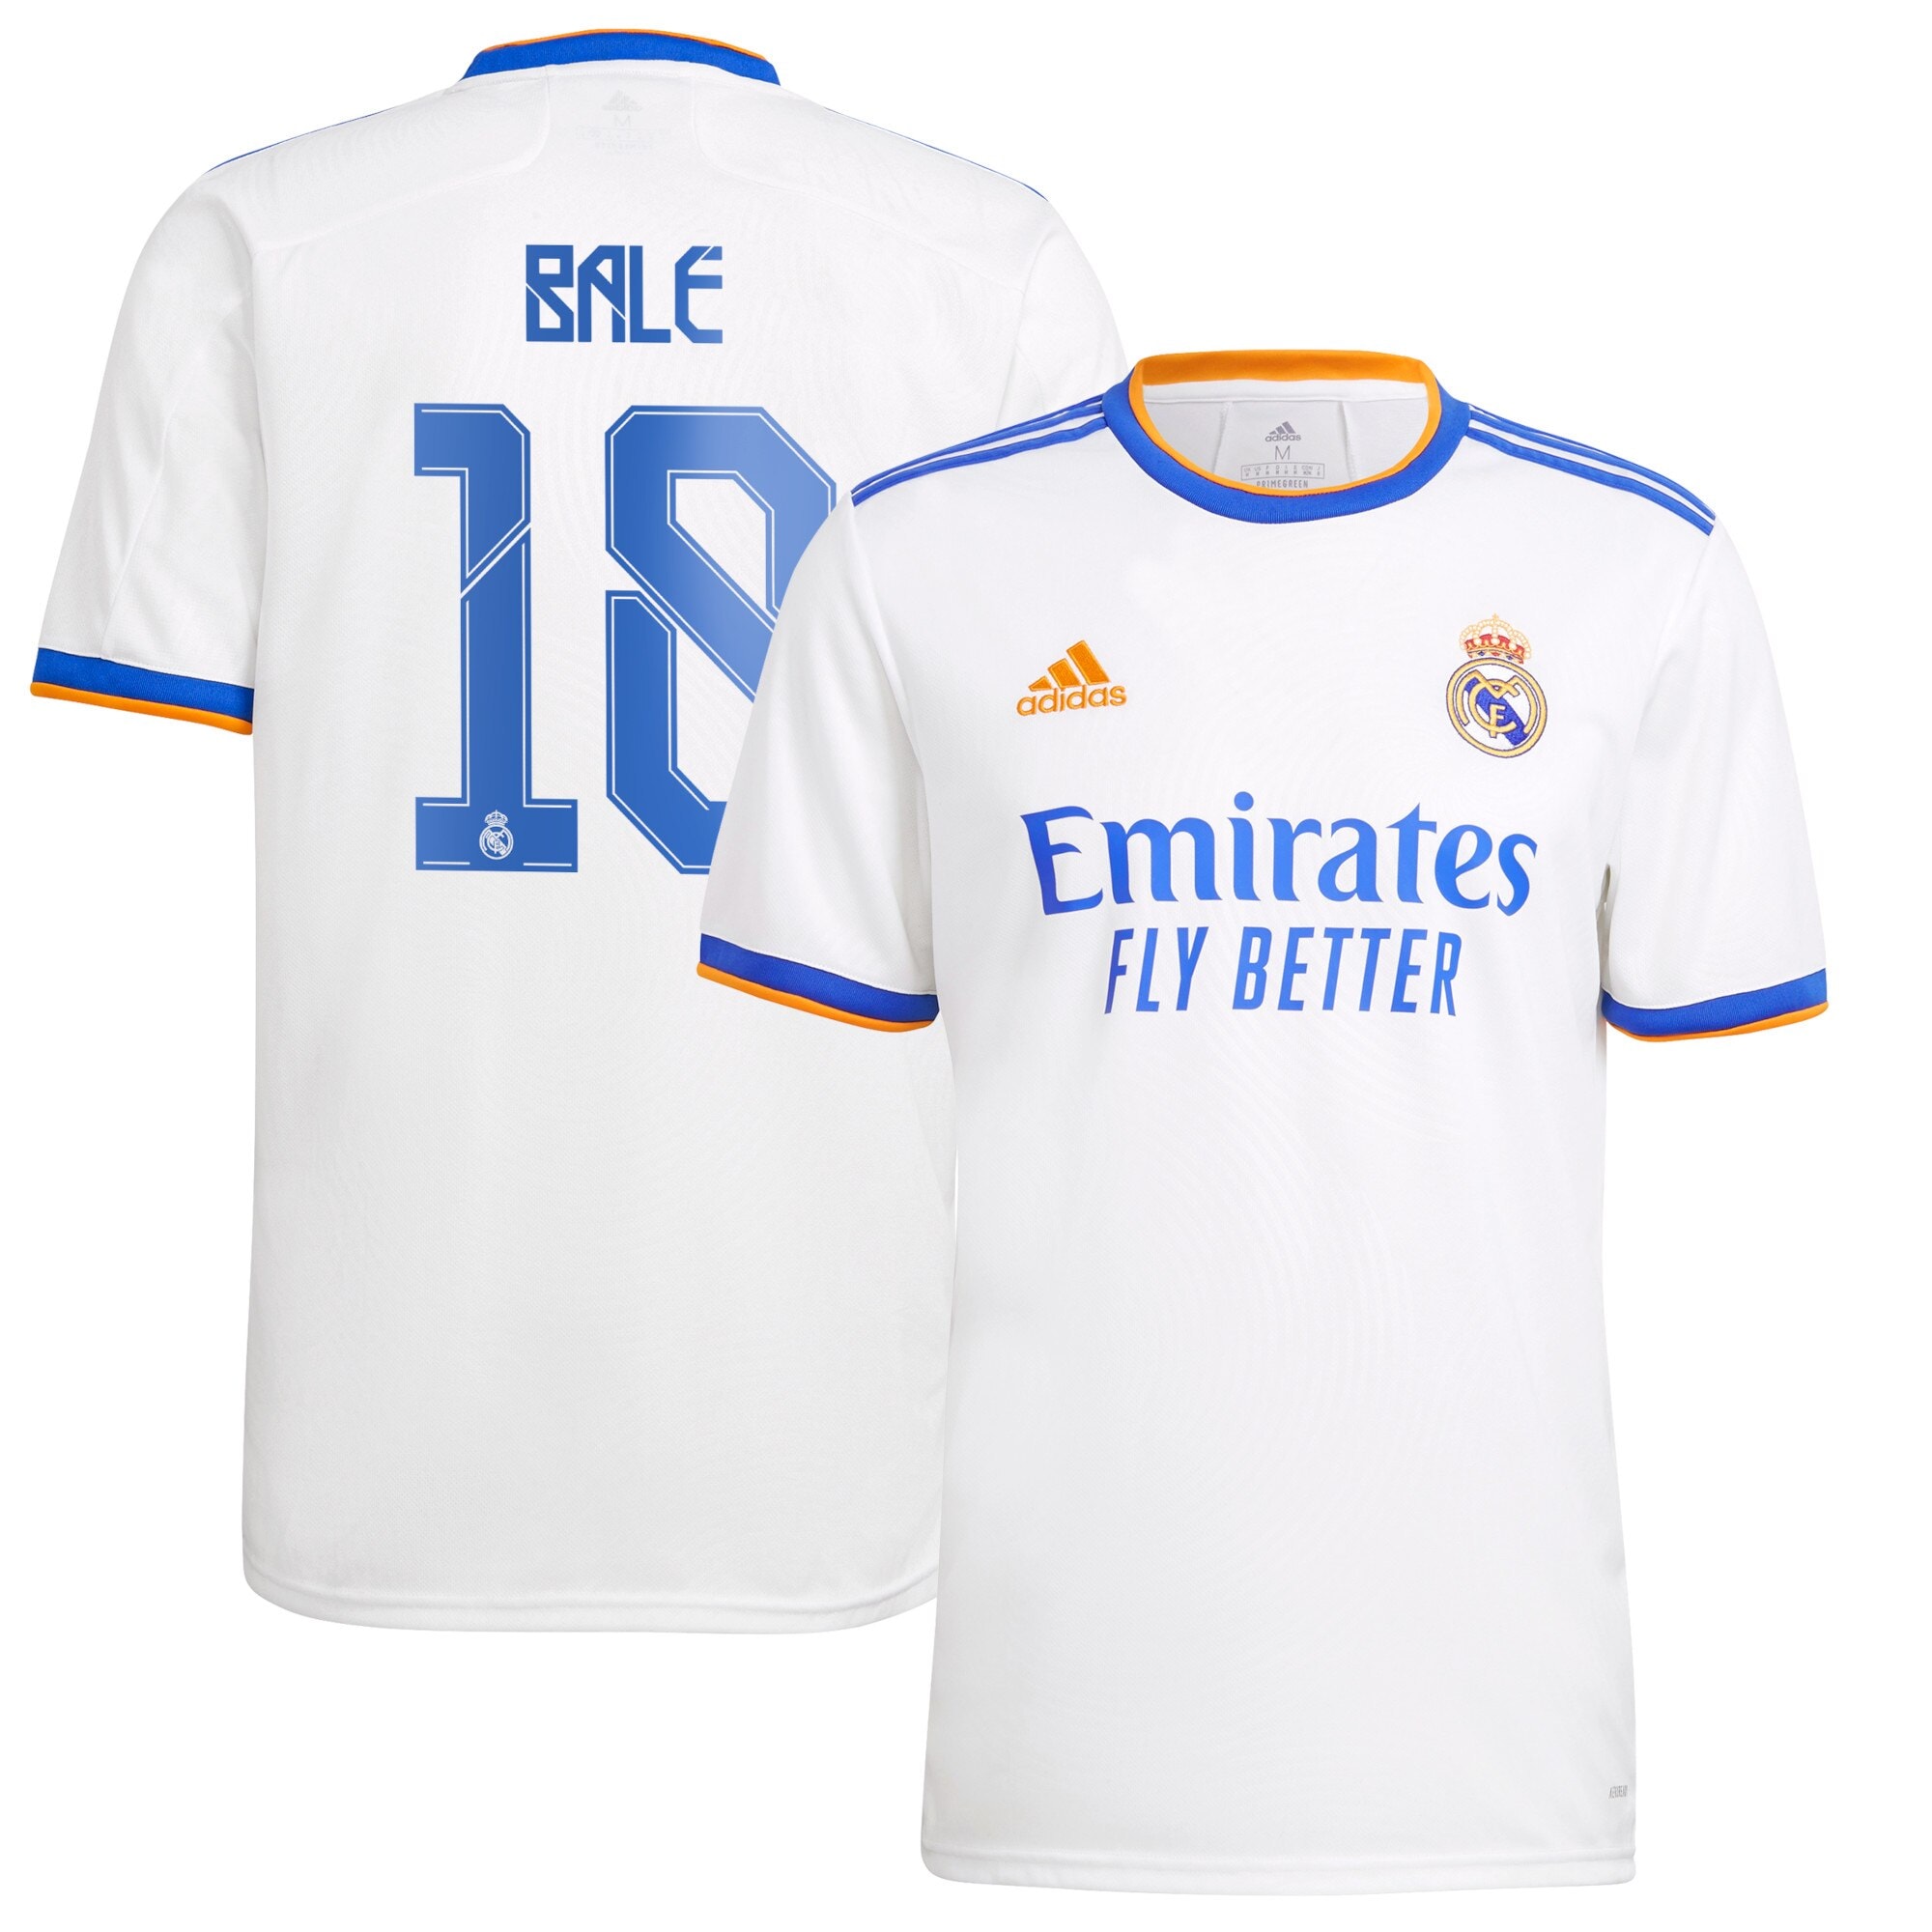 Adidas Real Madrid Home Shirt 2021-22 with Bale 18 Printing